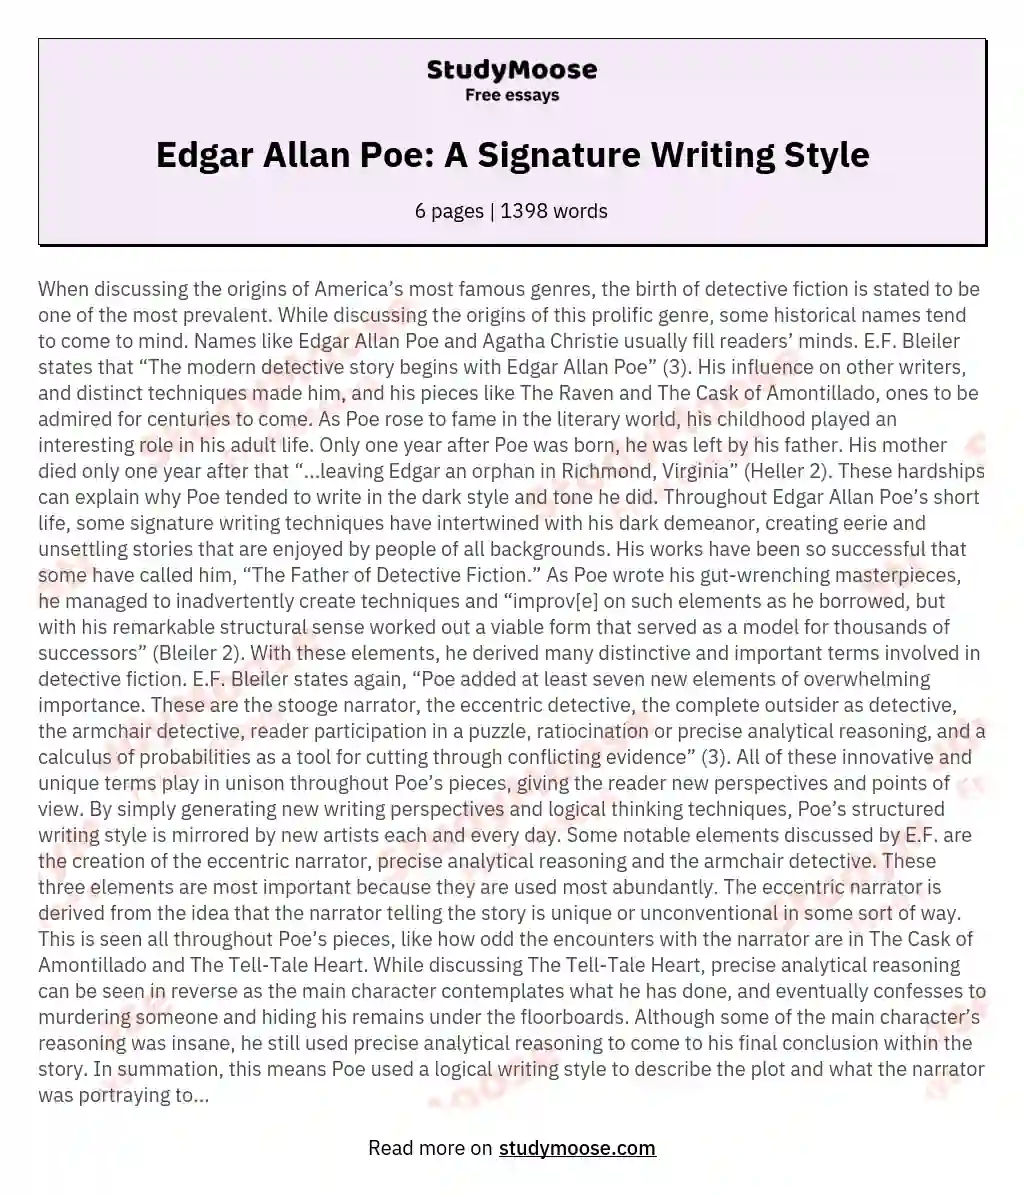 Edgar Allan Poe: A Signature Writing Style essay